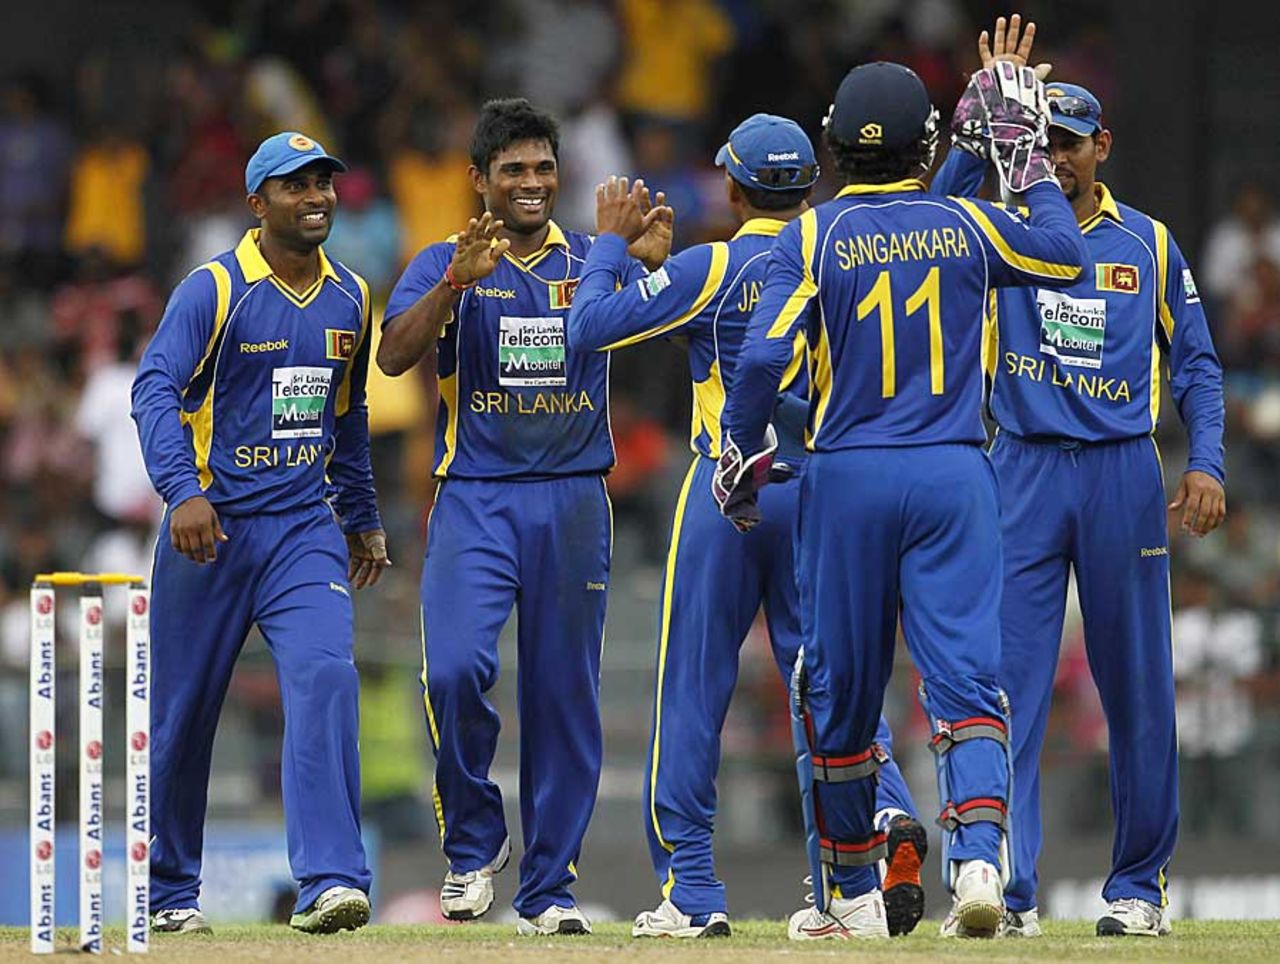 Seekkuge Prasanna got rid of Michael Hussey, Sri Lanka v Australia, 5th ODI, Colombo, August 22, 2011